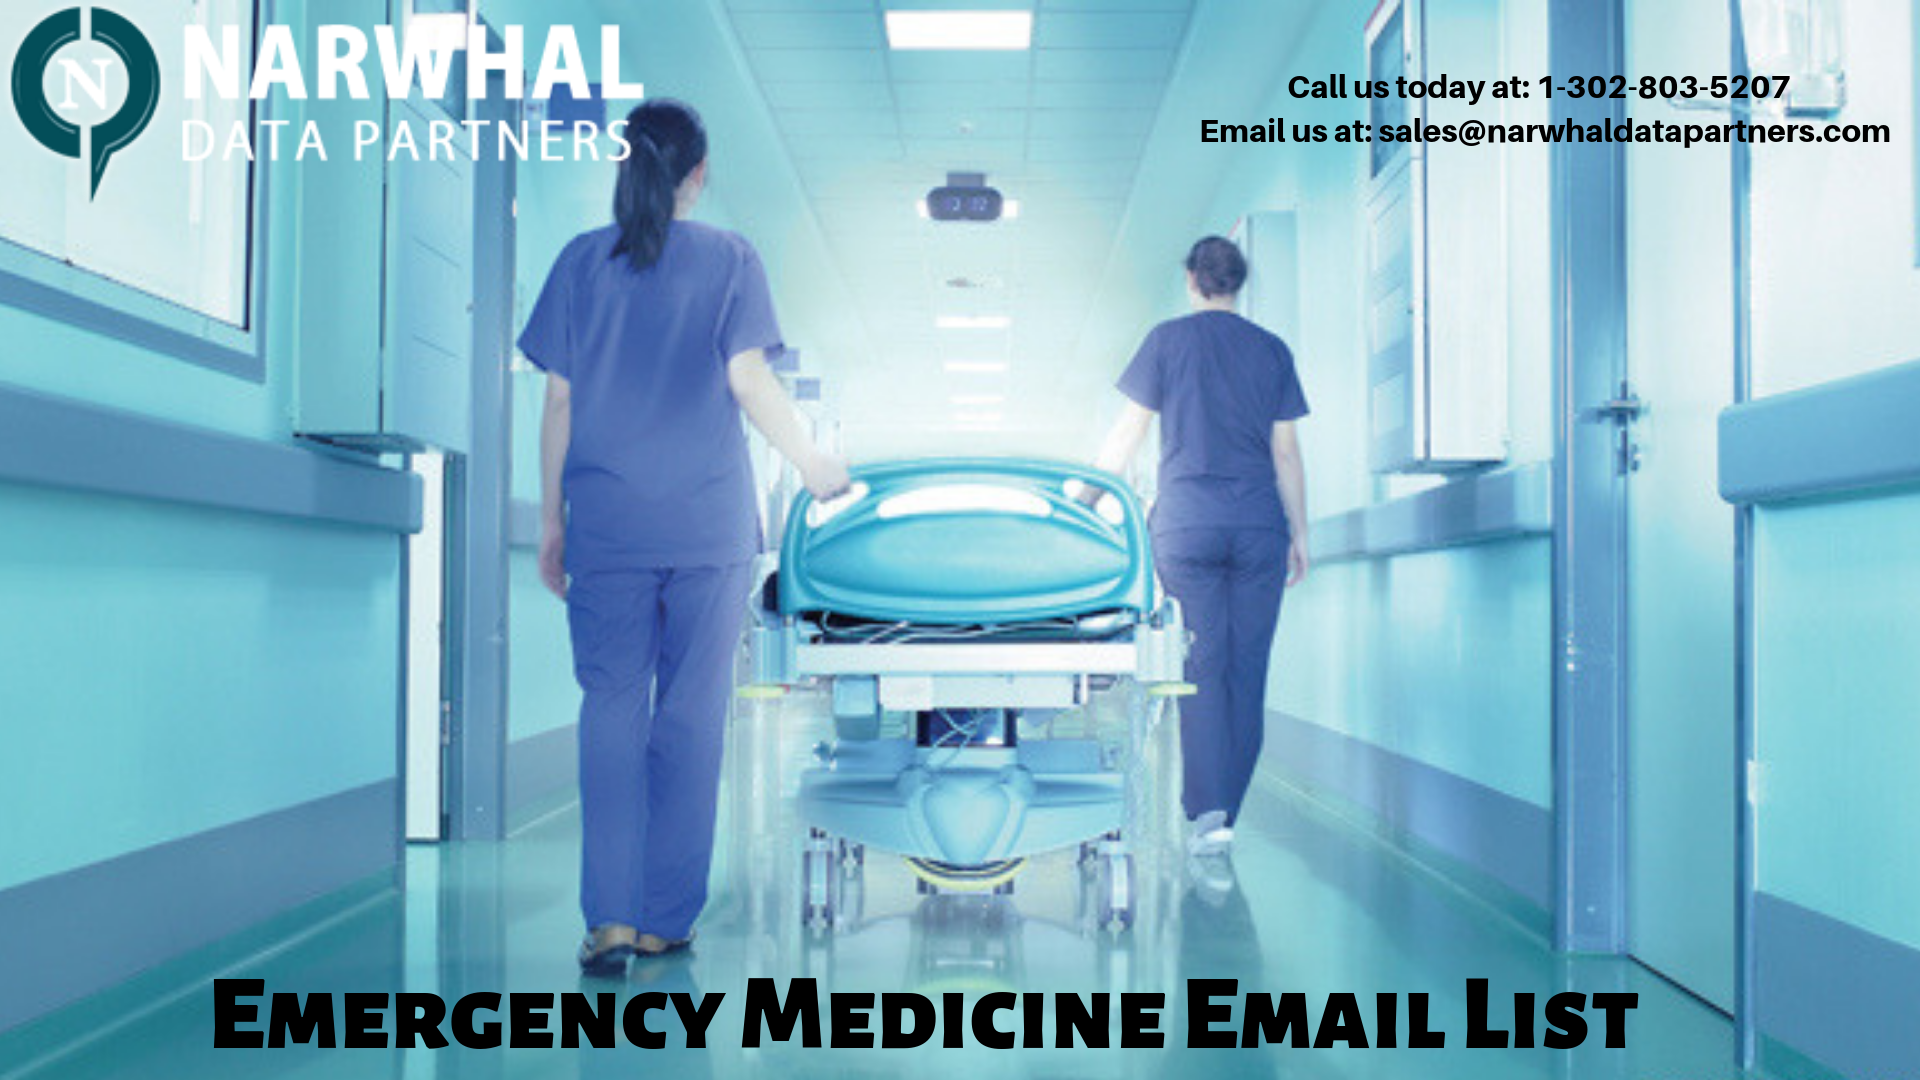 http://narwhaldatapartners.com/emergency-medicine-email-list.html